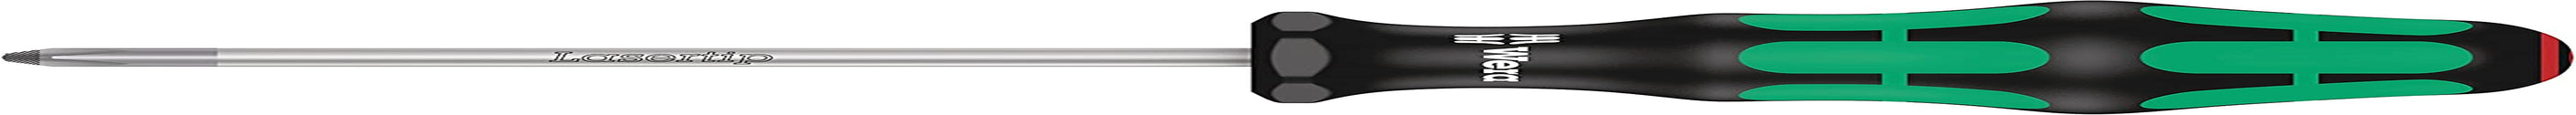 Kraftform Plus 334/6 Screwdriver Set with Rack and Lasertip, (Piece of 6)